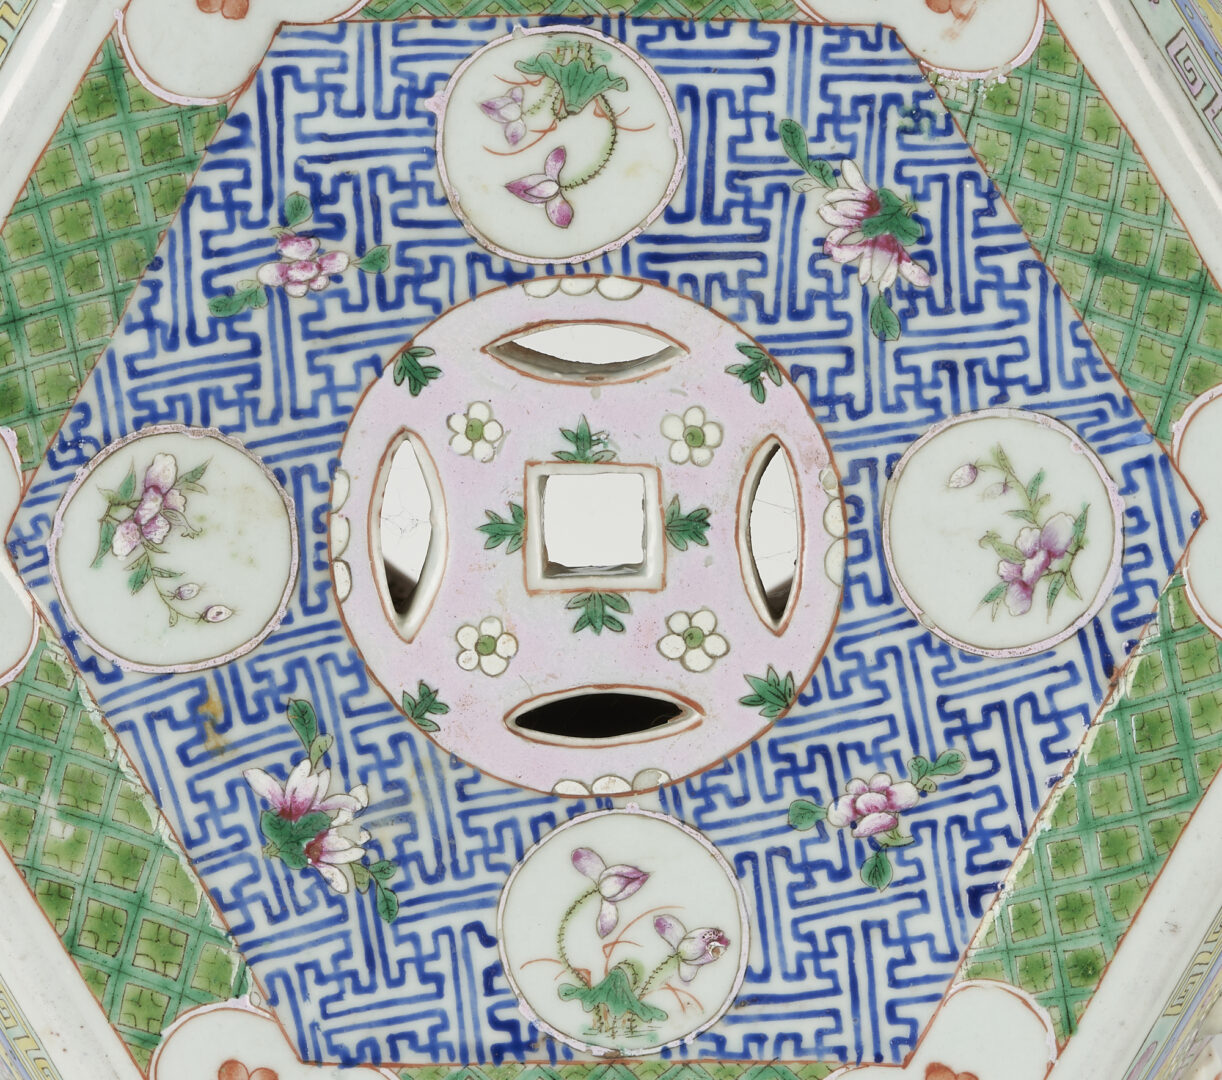 Lot 5: Chinese Famille Rose Porcelain Garden Seat